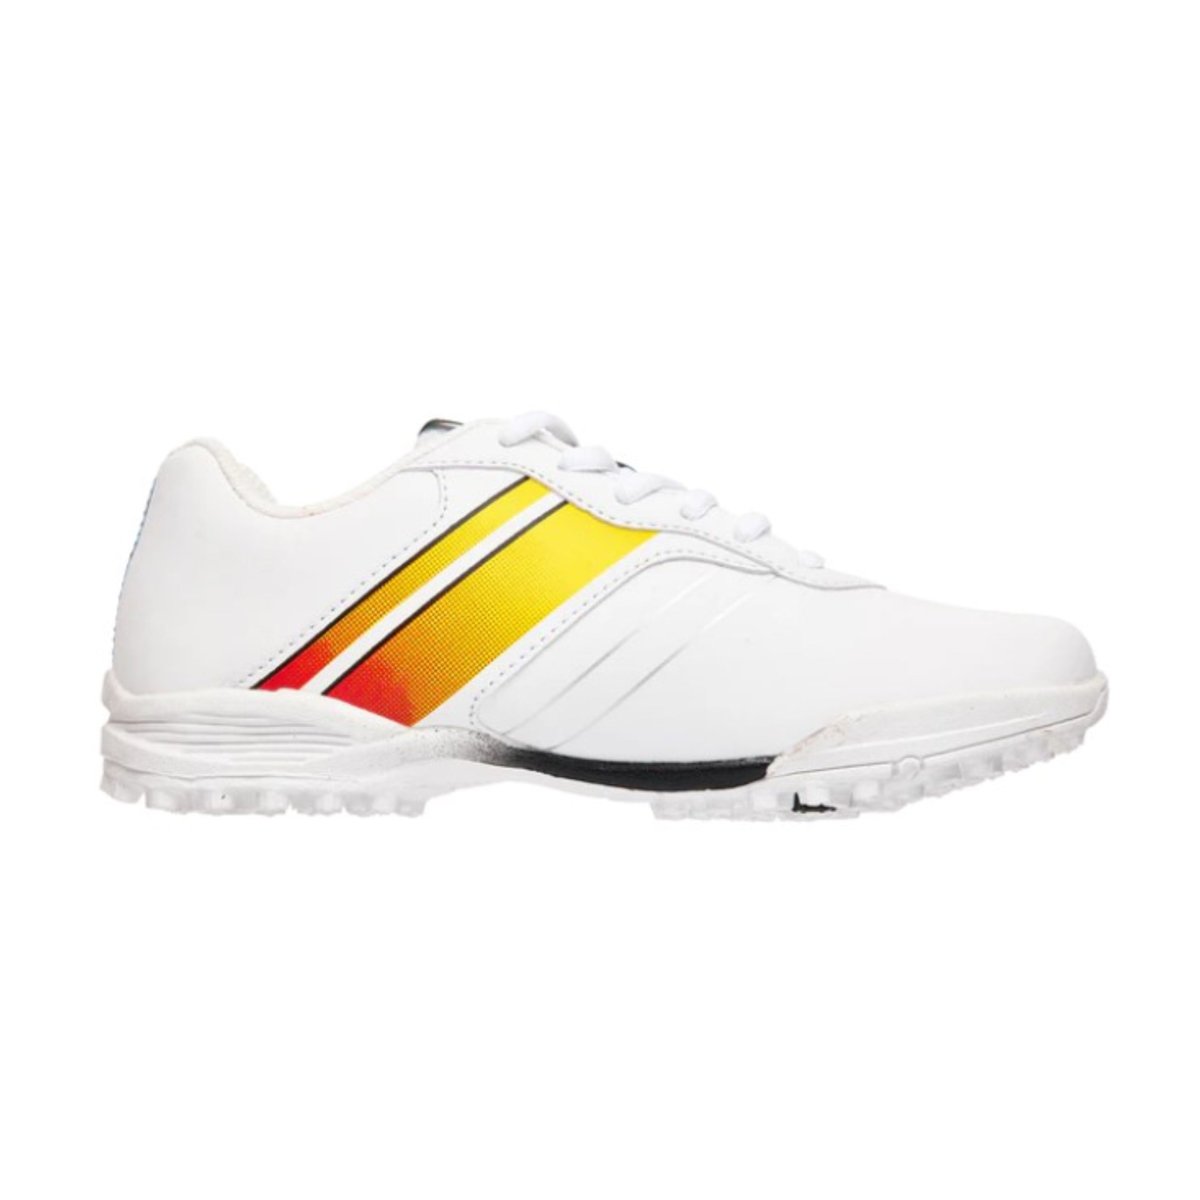 Kookaburra Pro 5.0 Rubber Cricket Shoes - White/ Yellow/ Red - Acrux Sports